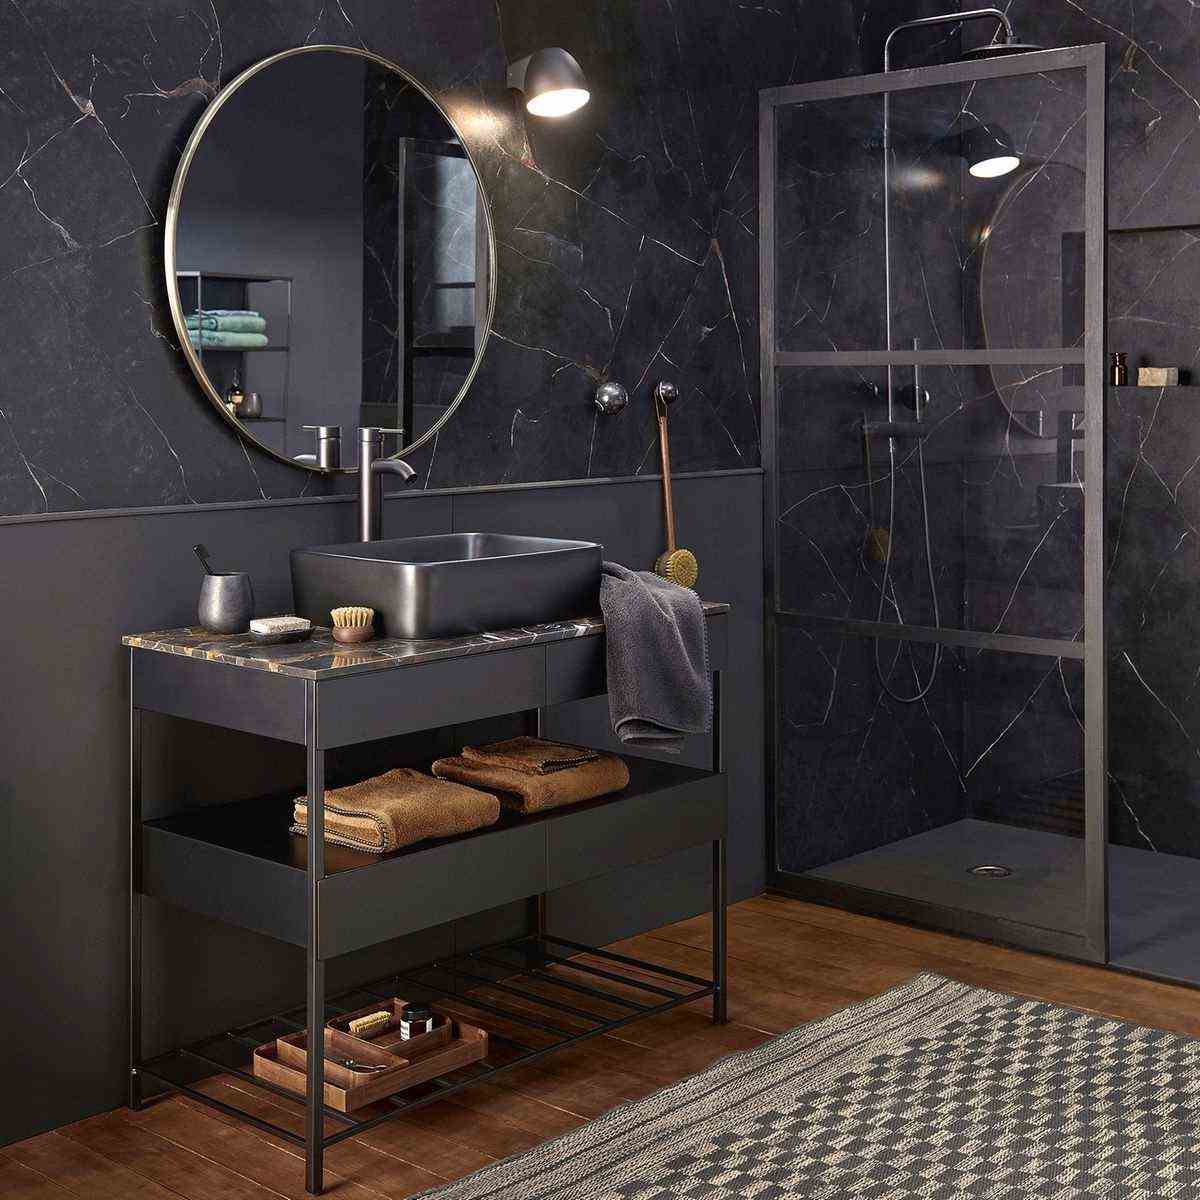 Luxurious black and wood bathroom